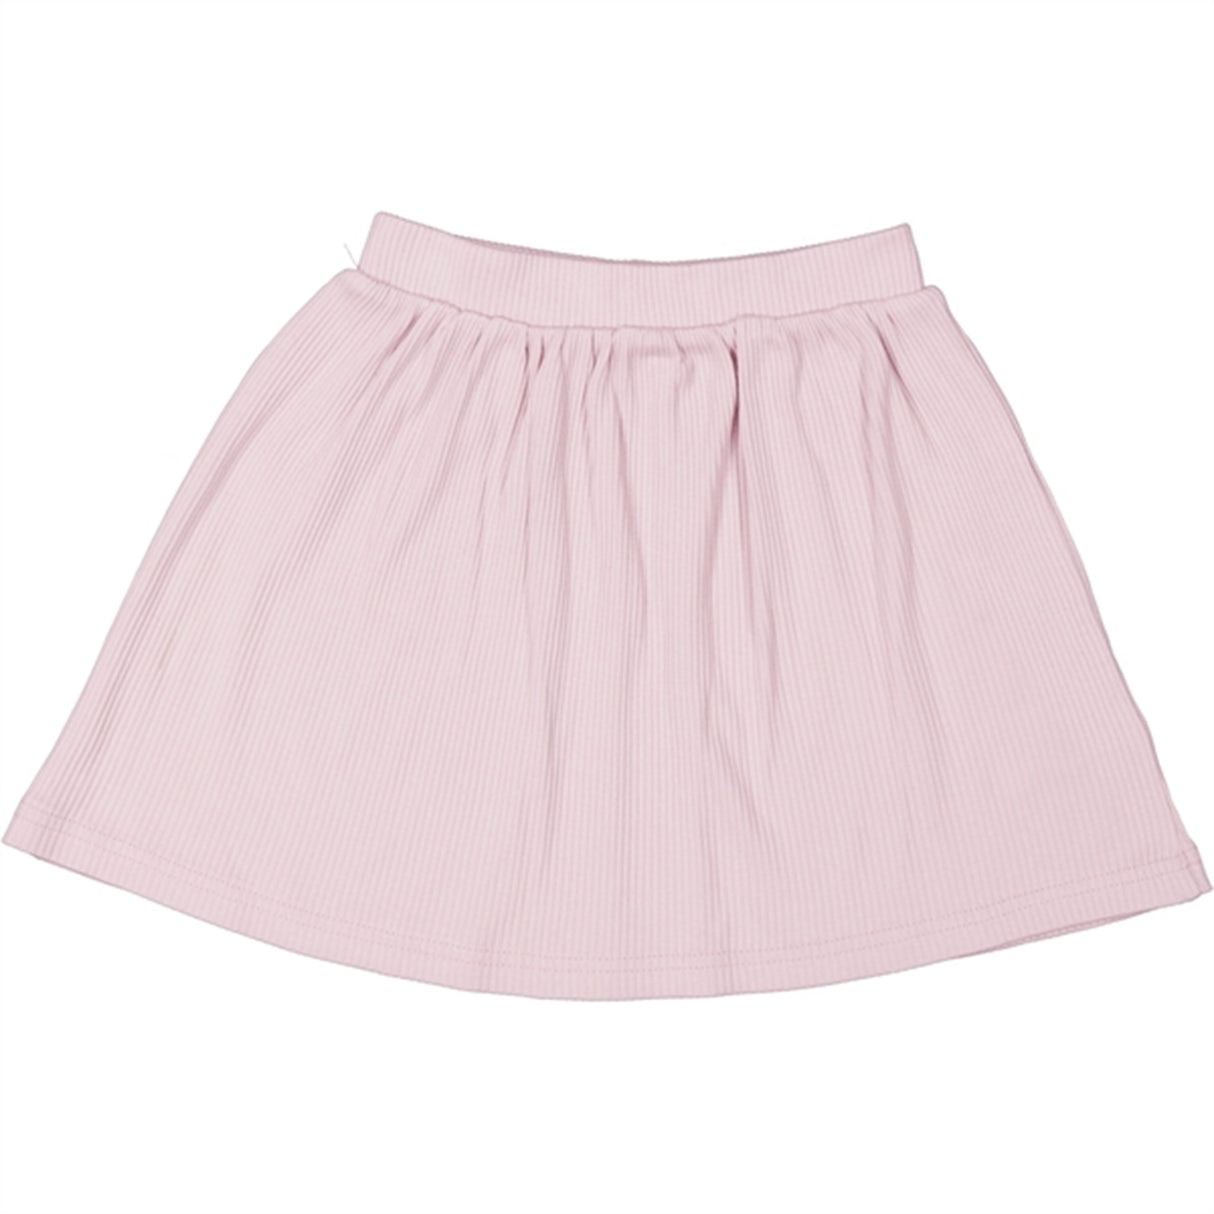 MarMar Modal Lilac Bloom Skirt